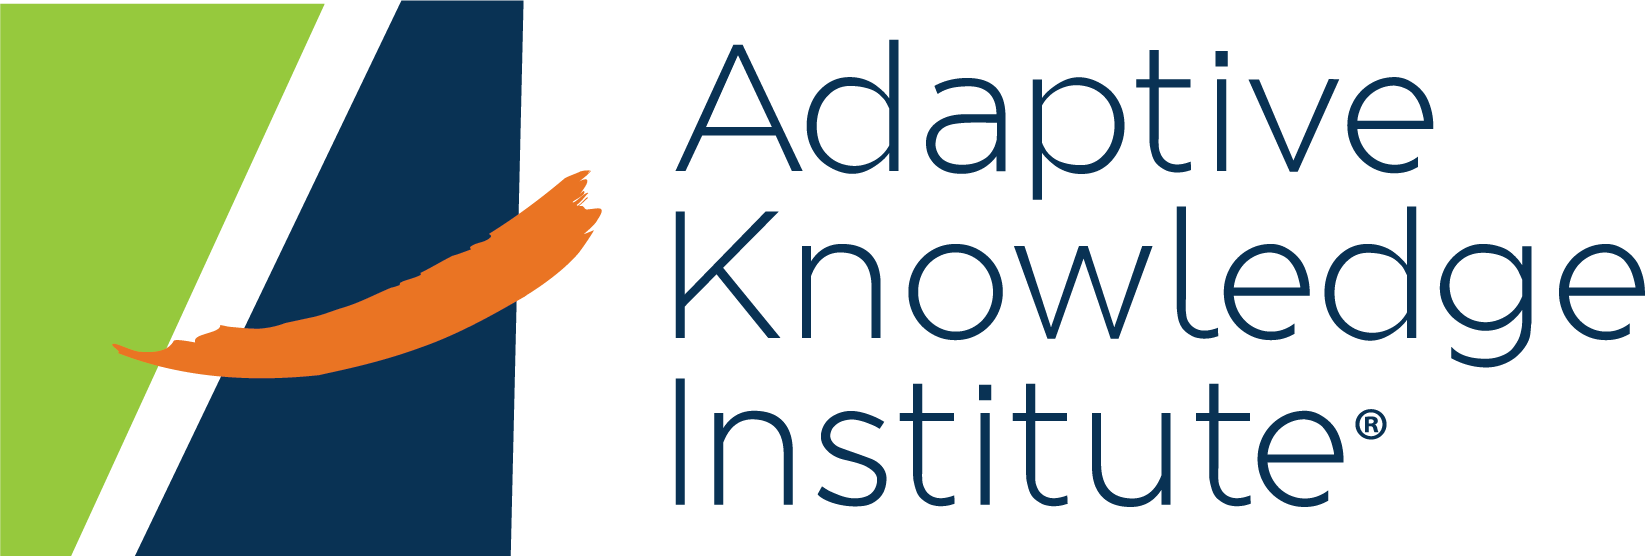 Adaptive Knowledge Institute